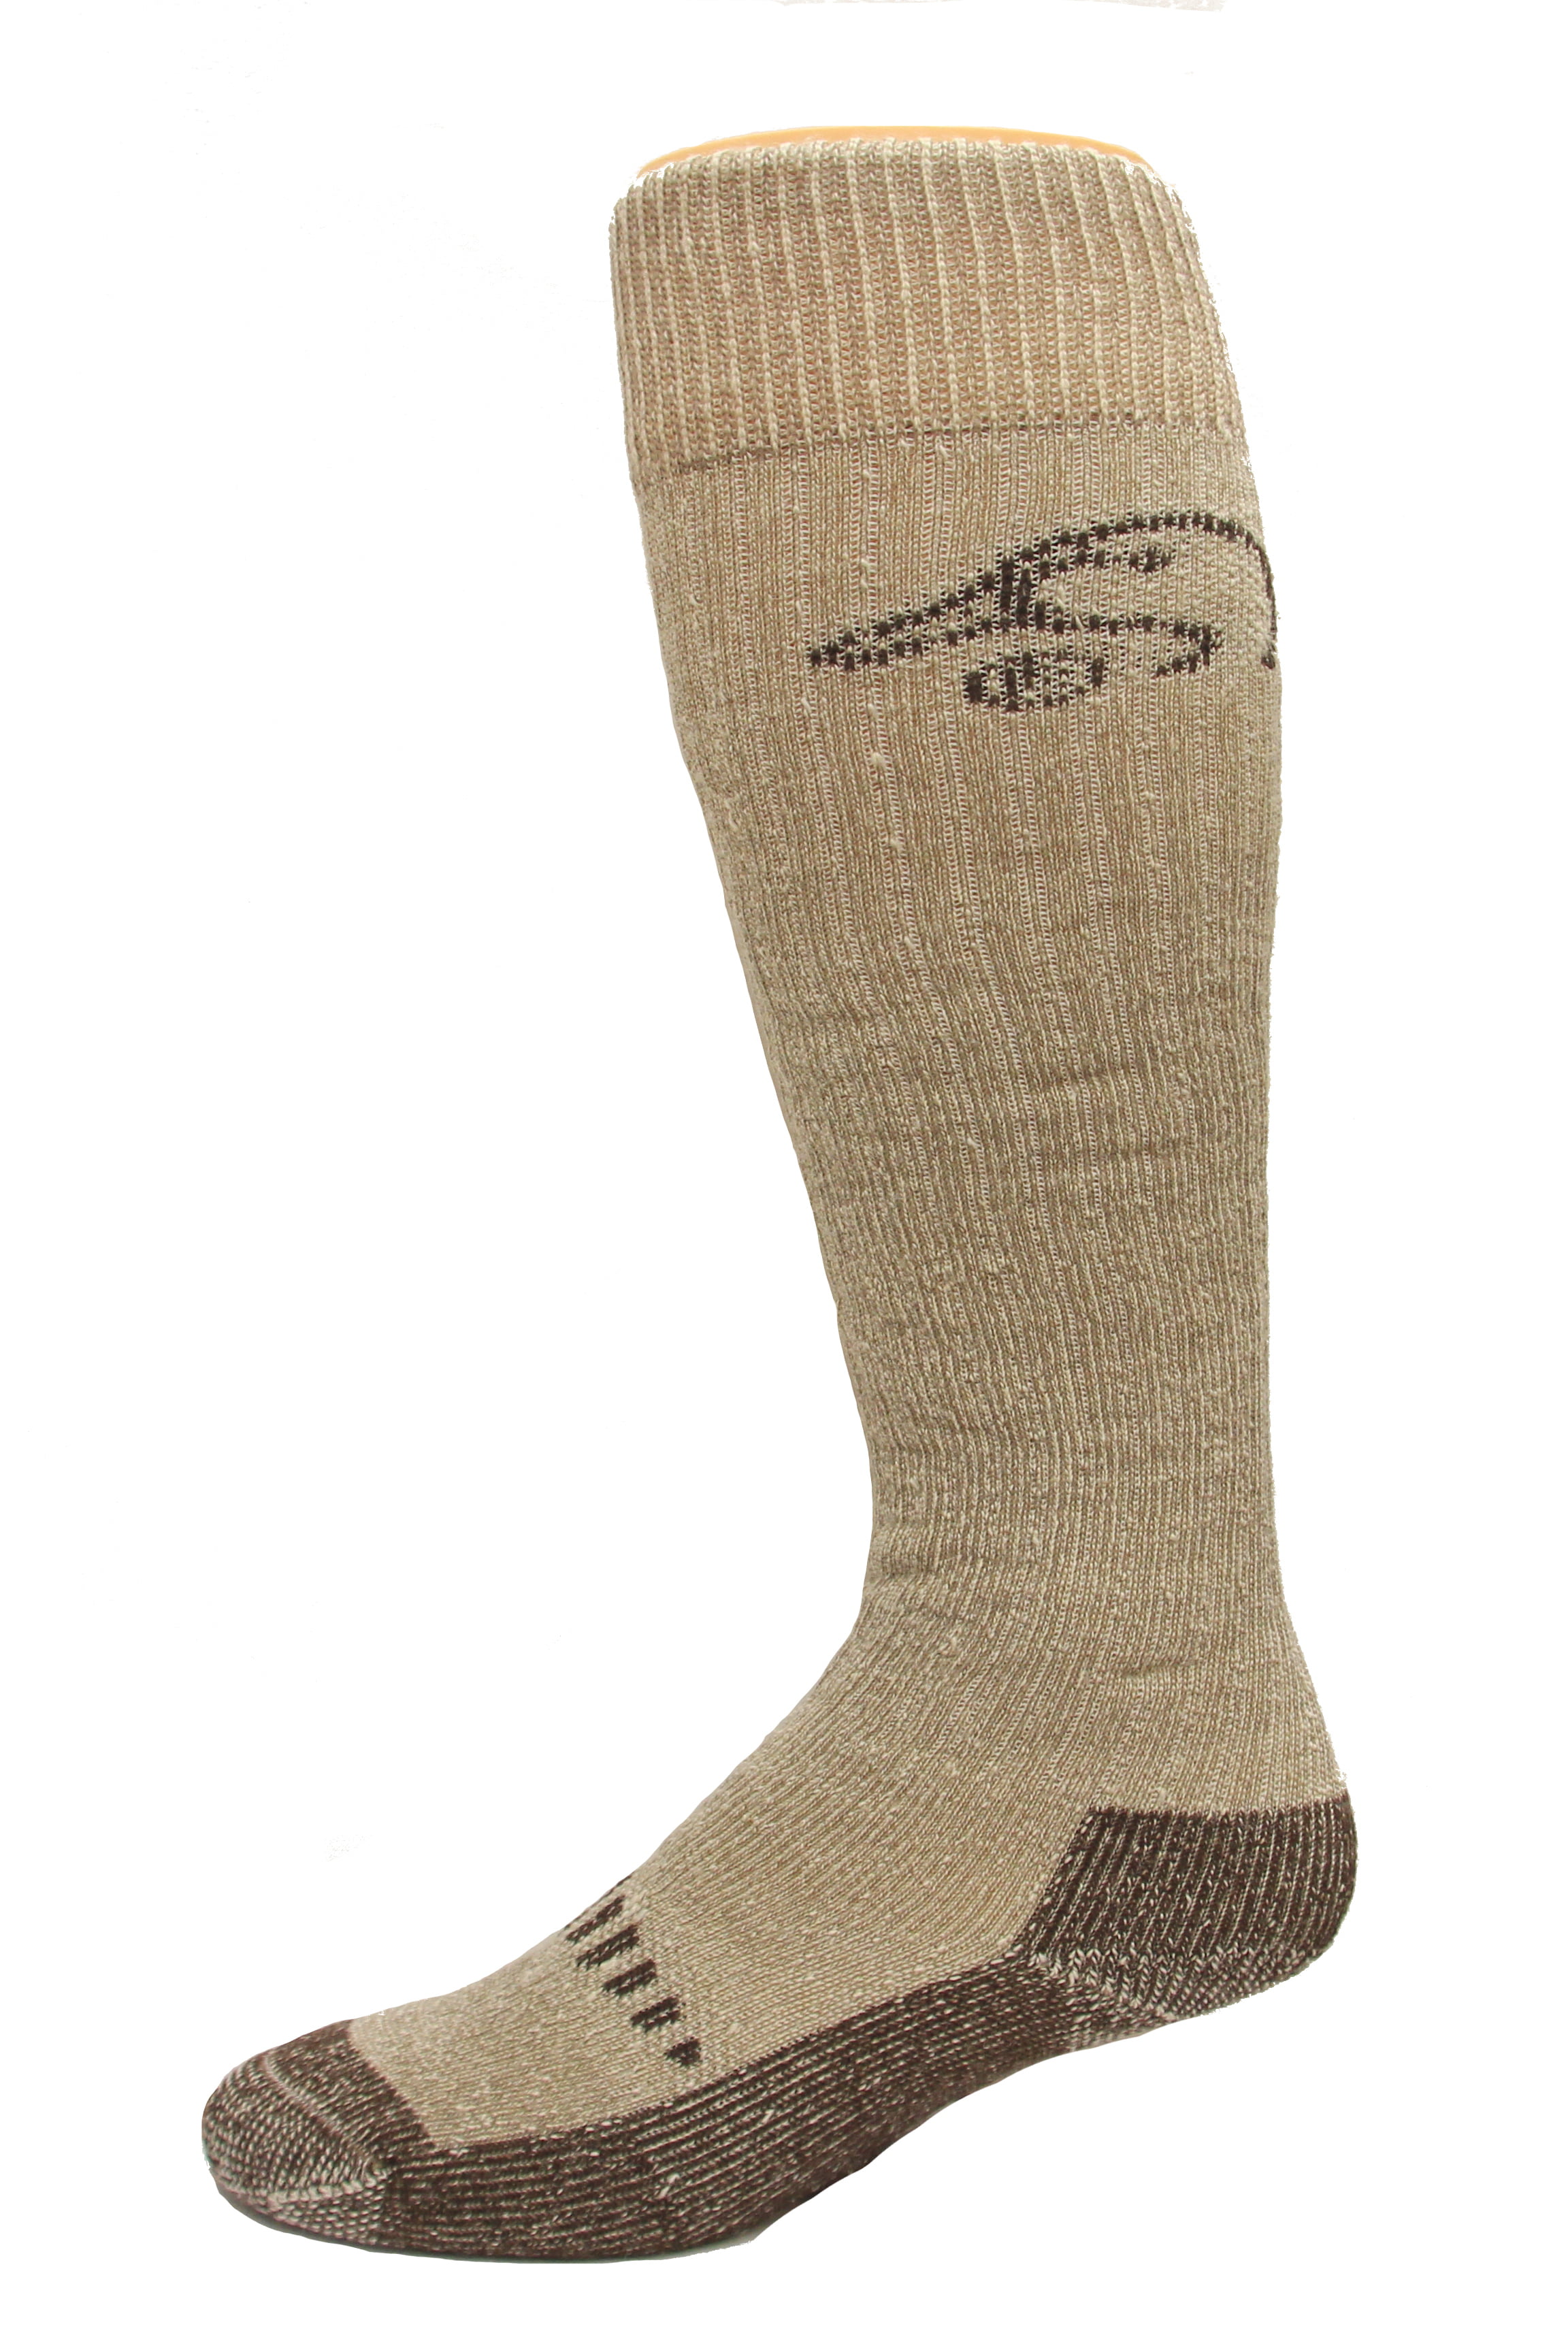 Carhartt work wear socks 12 pairs no show black w/grey toe/heel Lrg 9-12 sock 